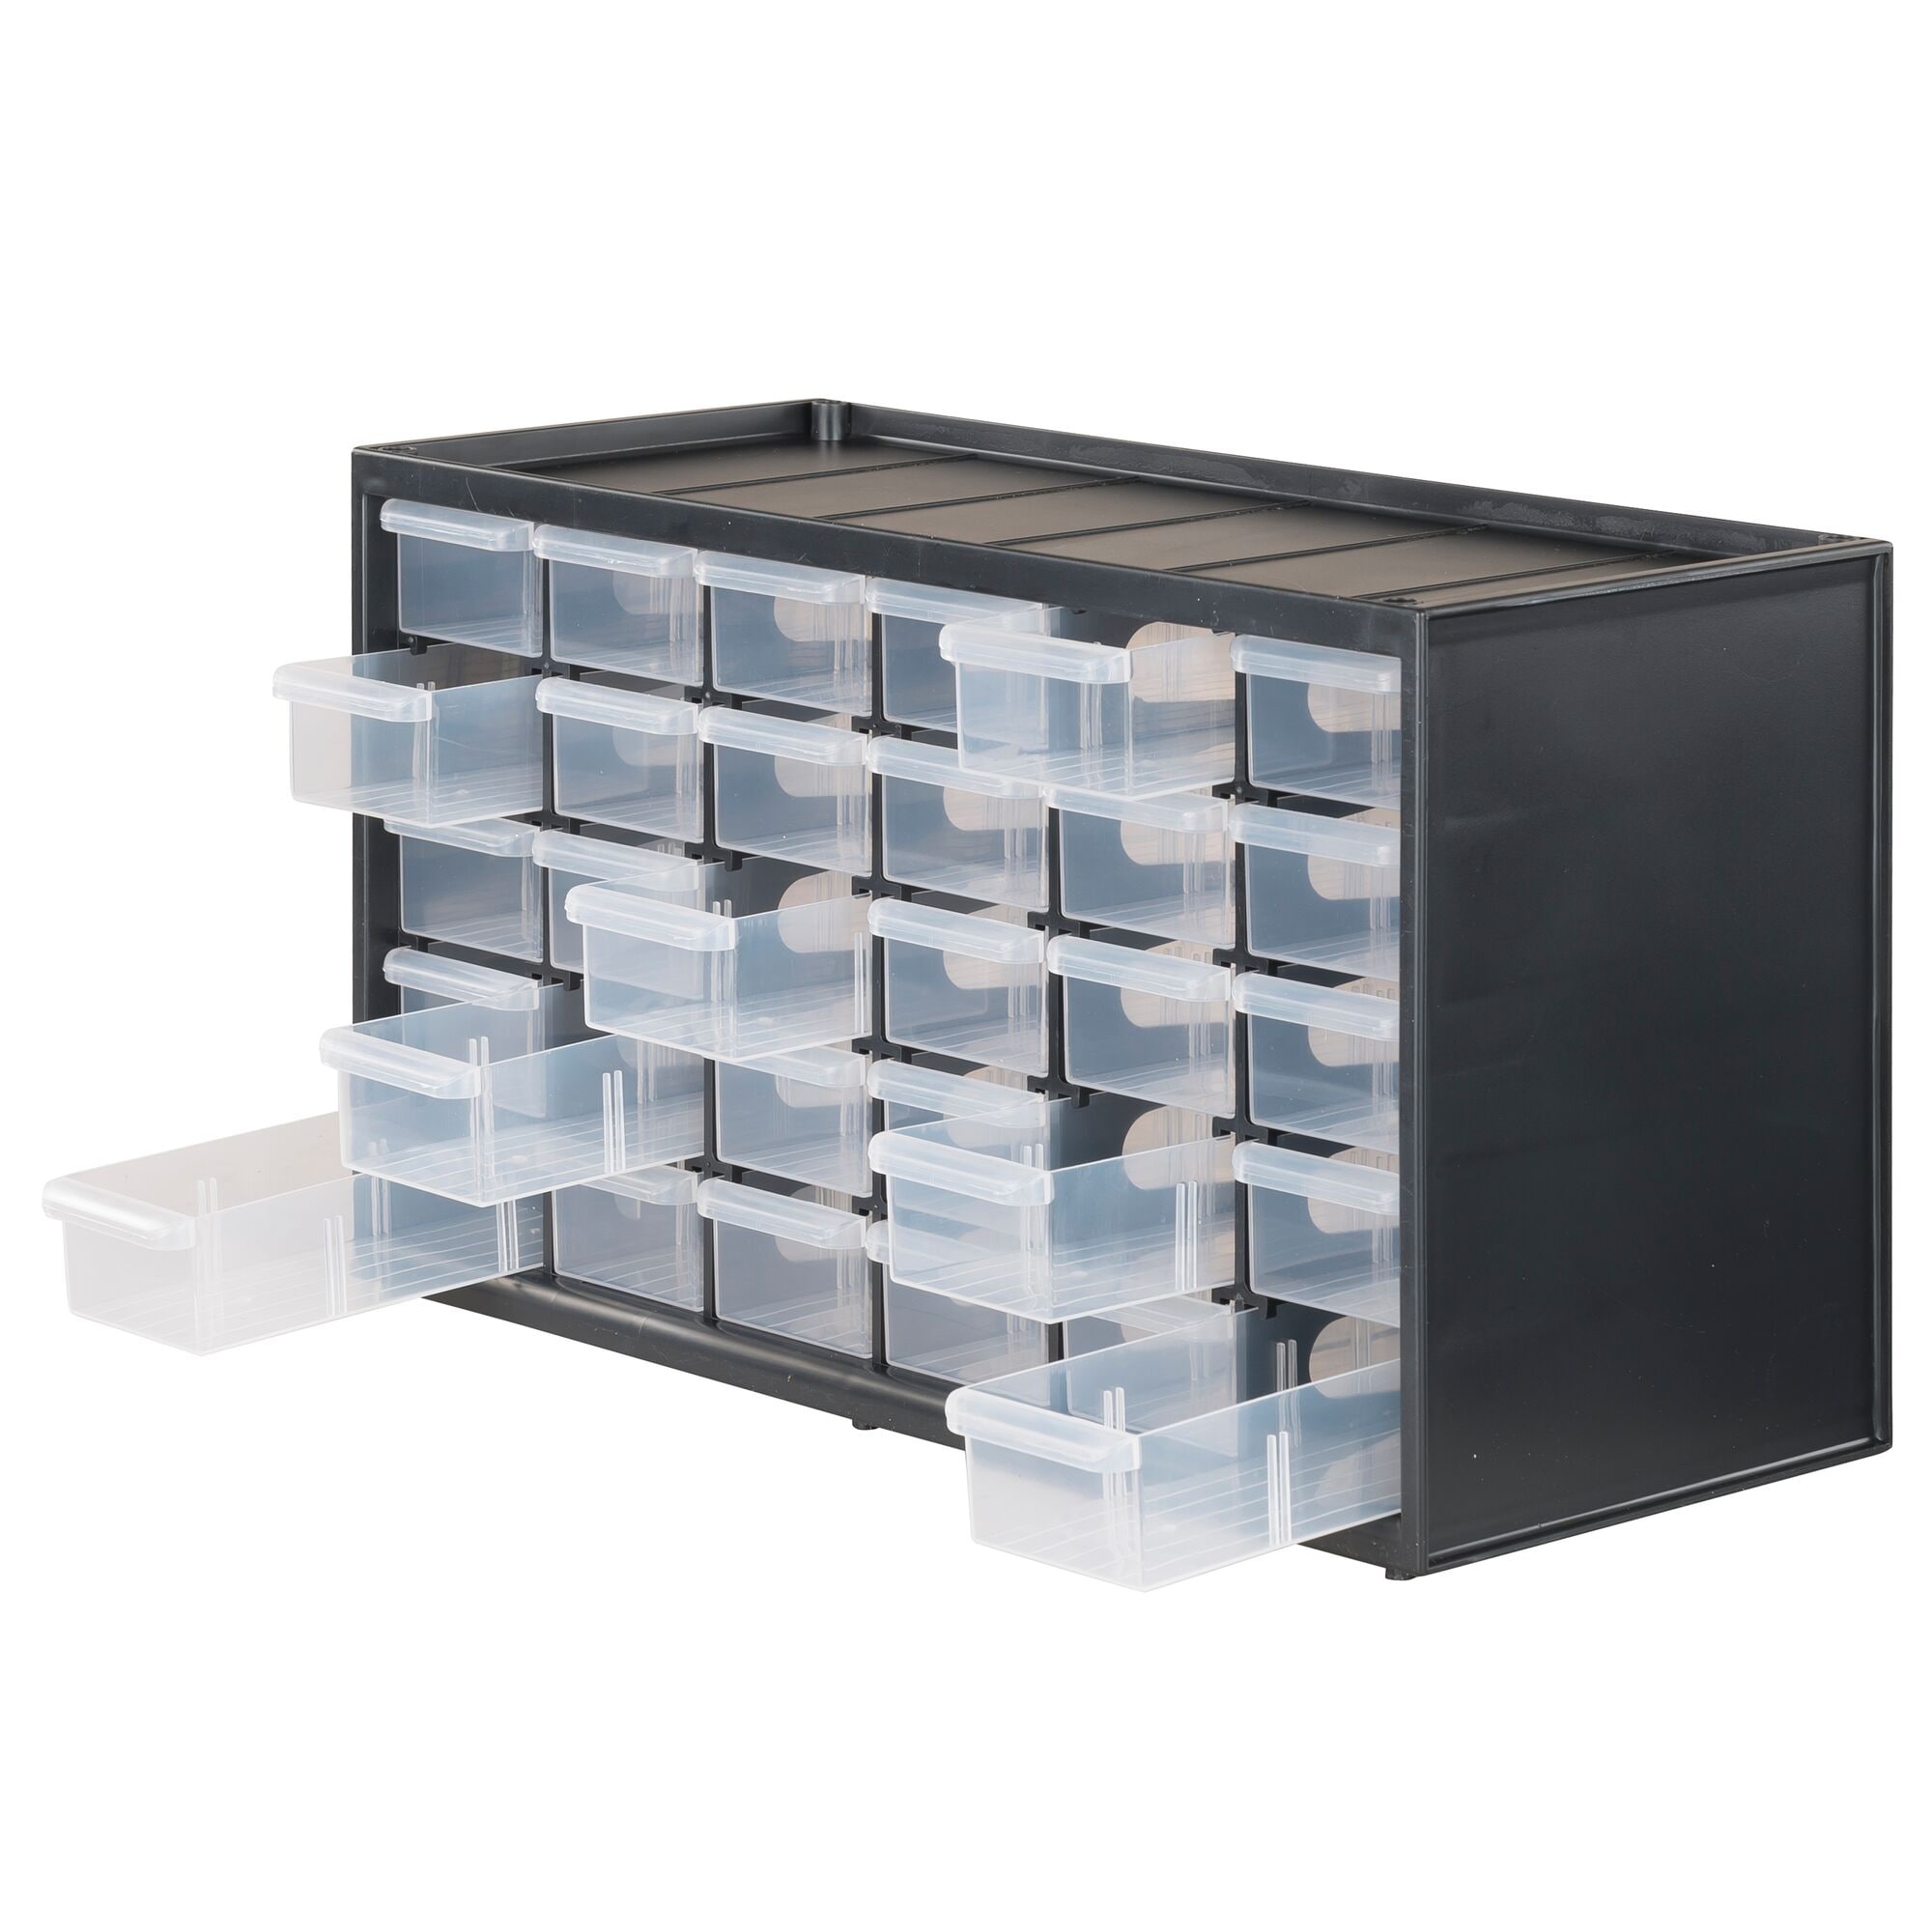 Storage Organizer Small 30 Drawer Bin Modular Storage System Easily  Stackable